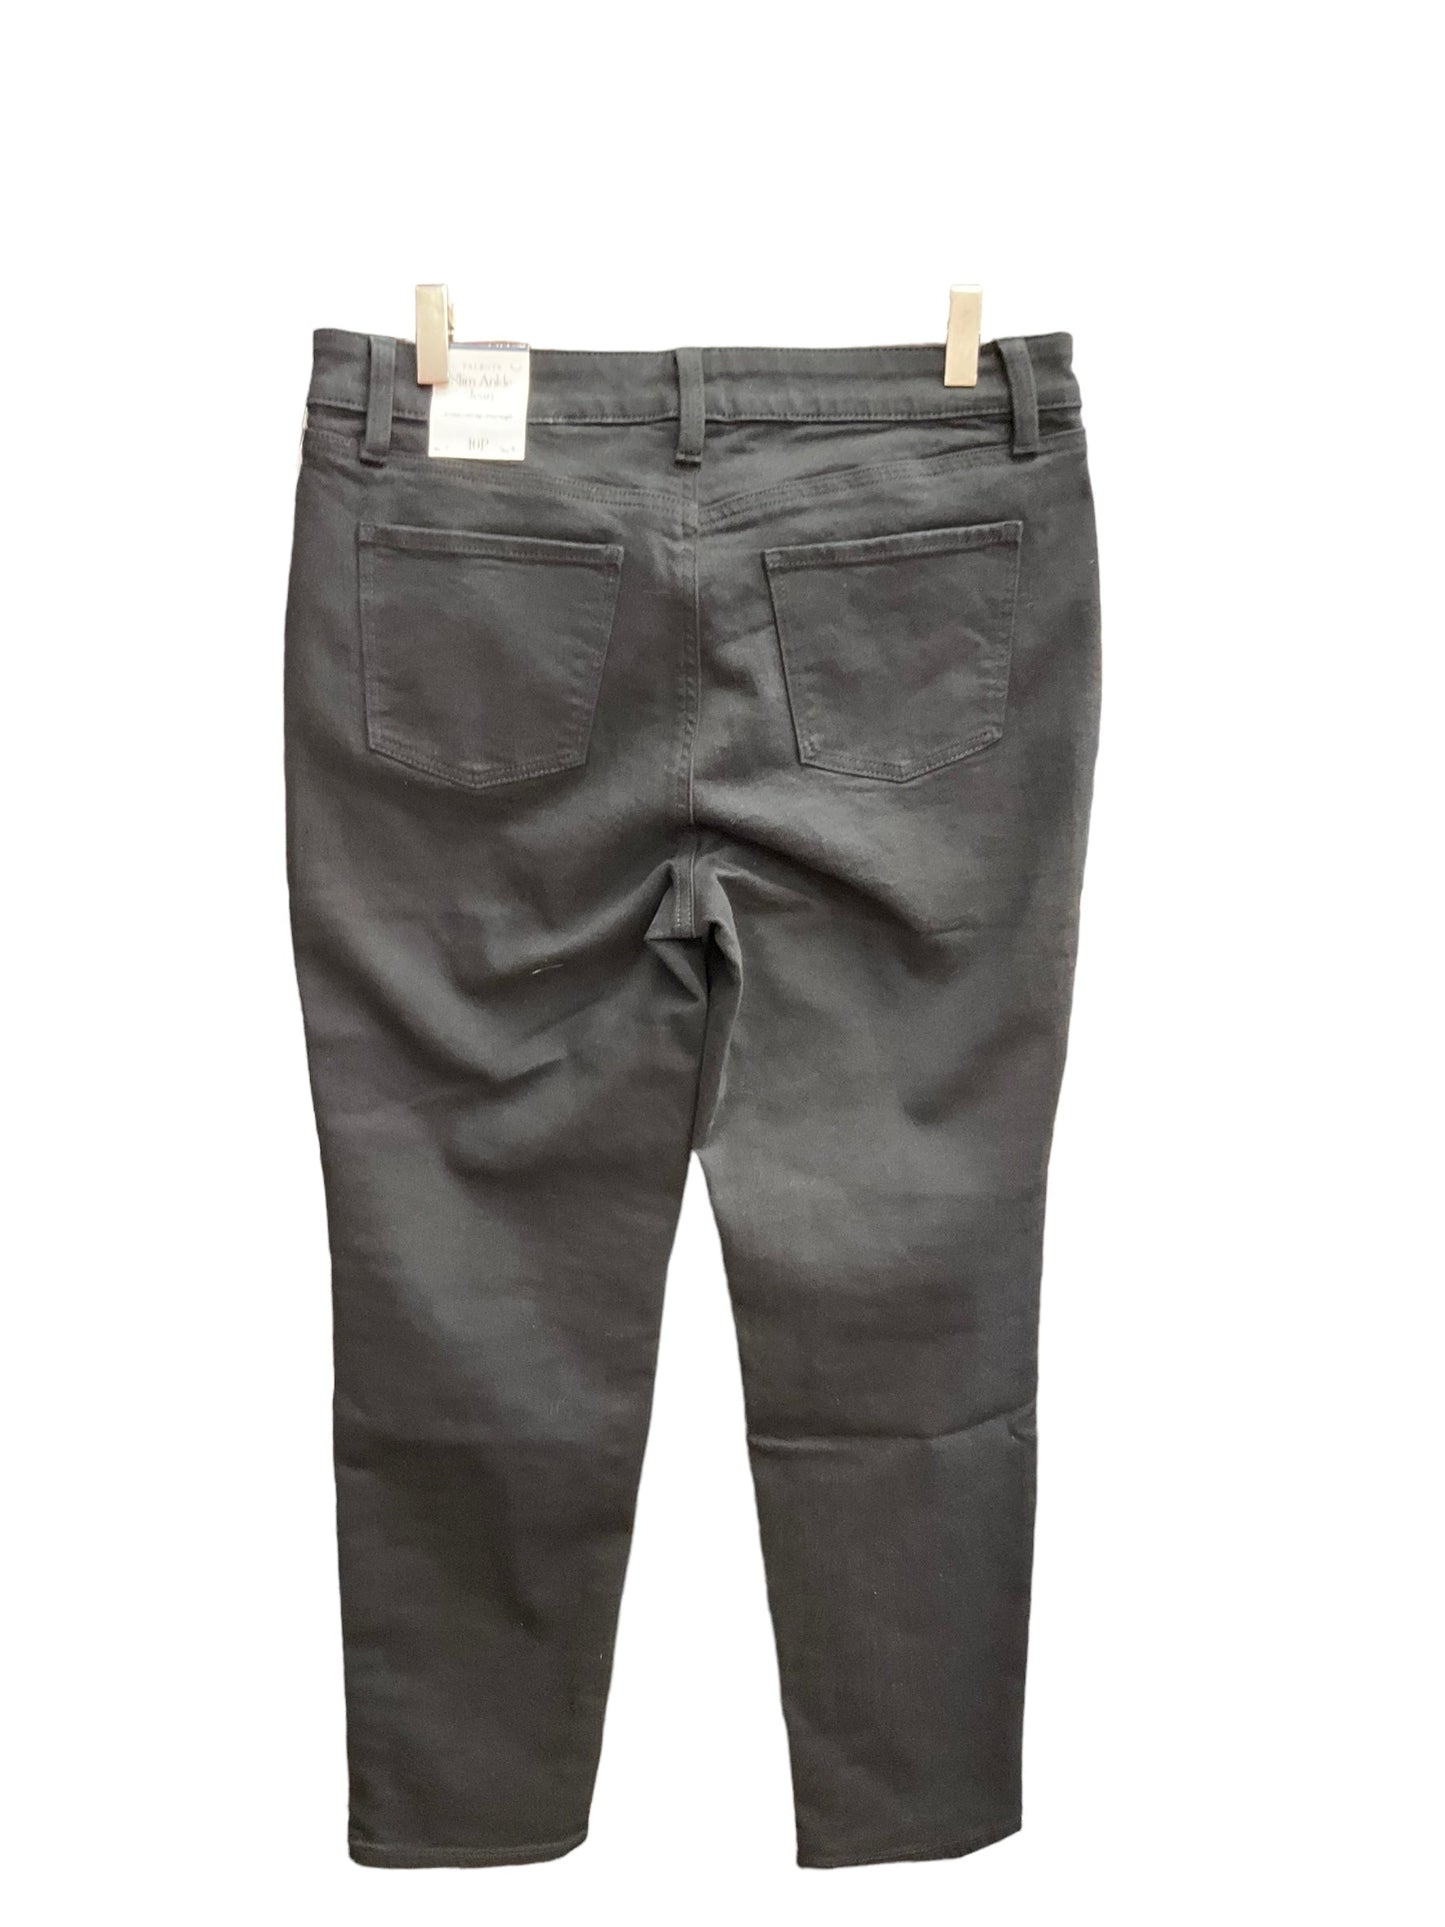 Black Denim Pants Cargo & Utility Talbots, Size 10petite